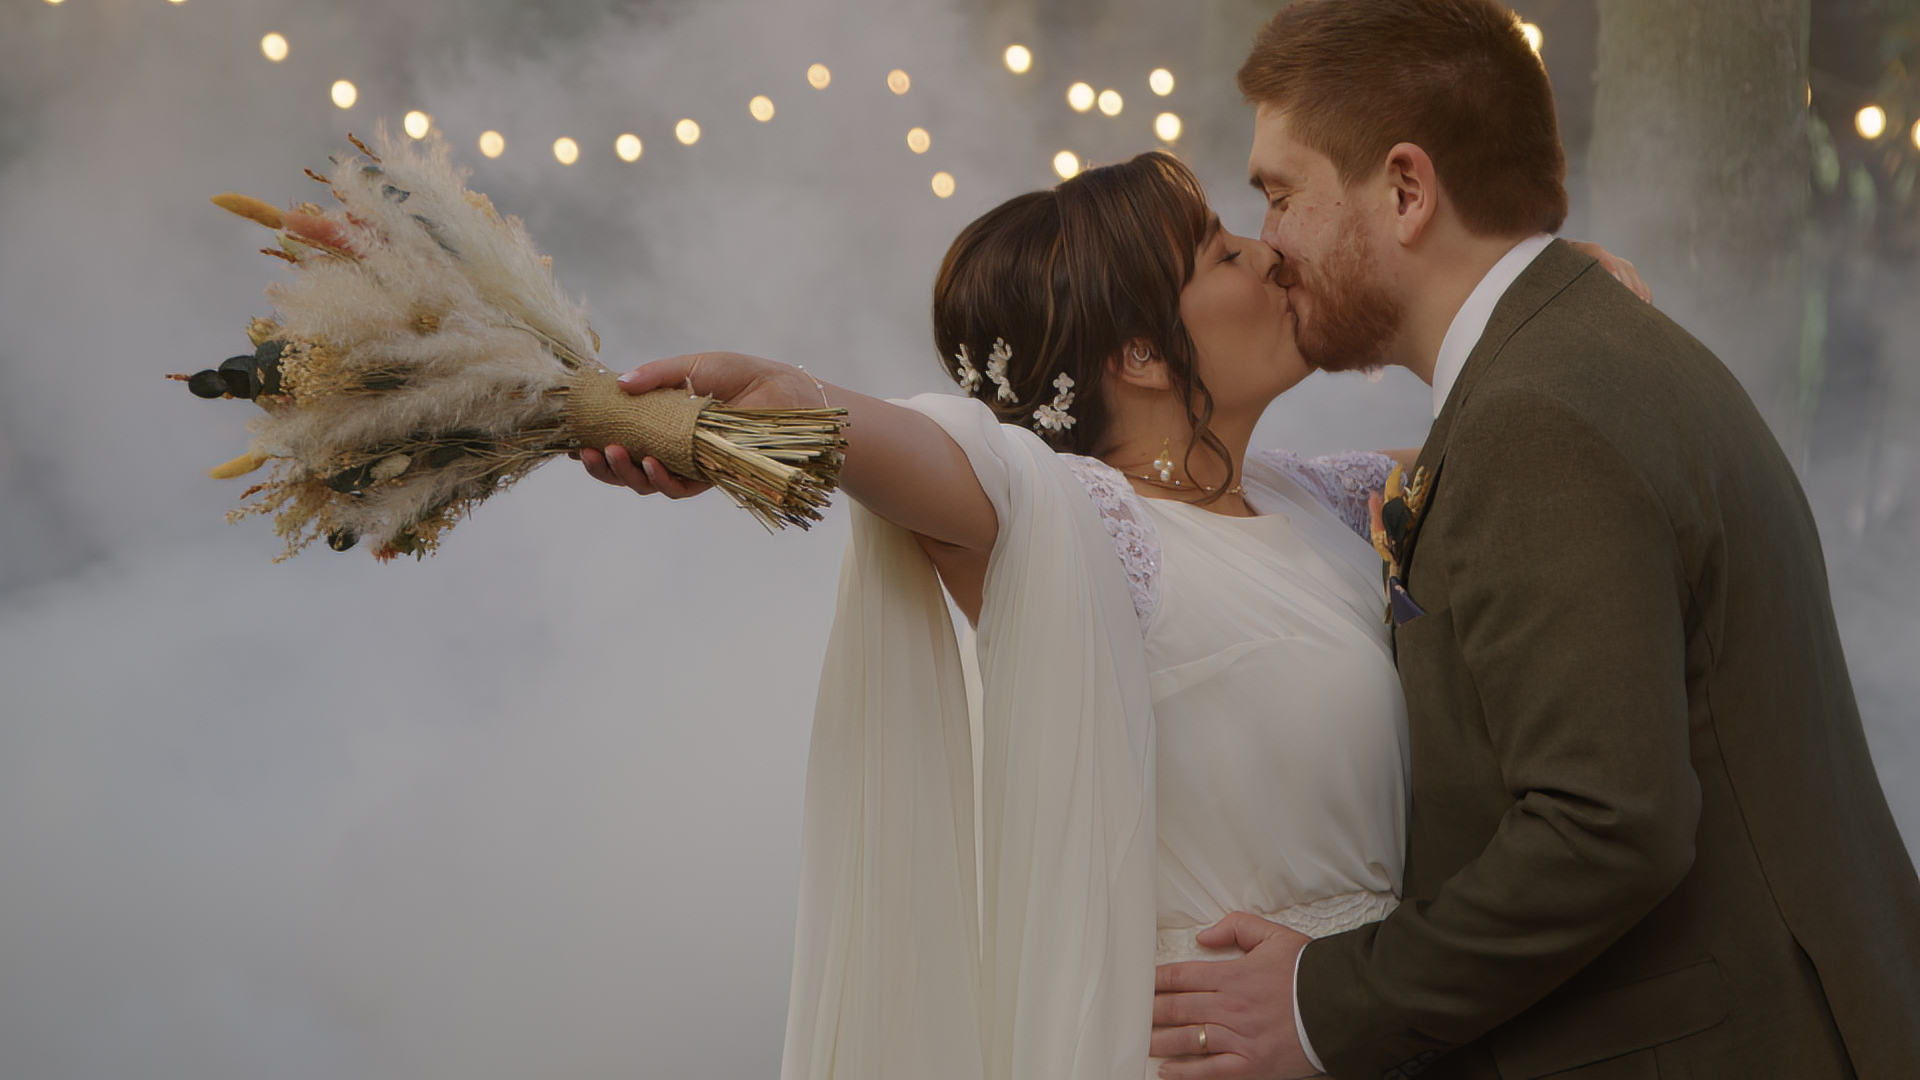 A Fun-Filled Rustic Woodland Wedding Film: Sarah & Art